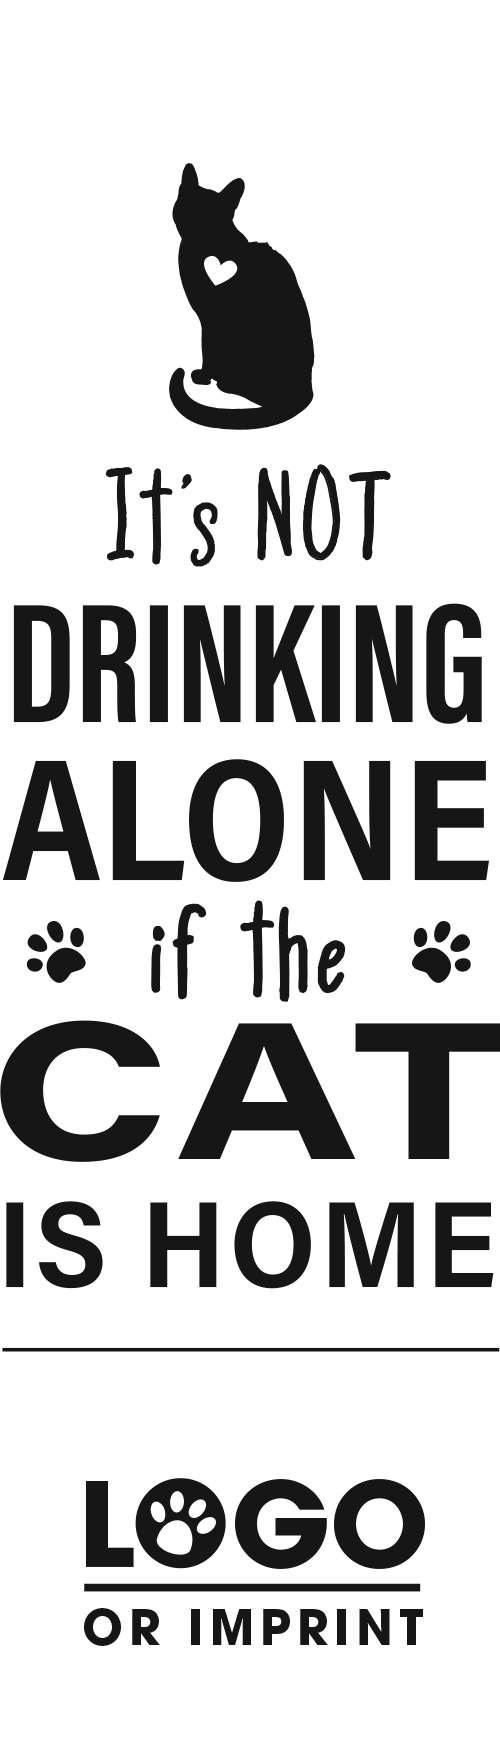 Not Drinking Alone-CAT thumbnail